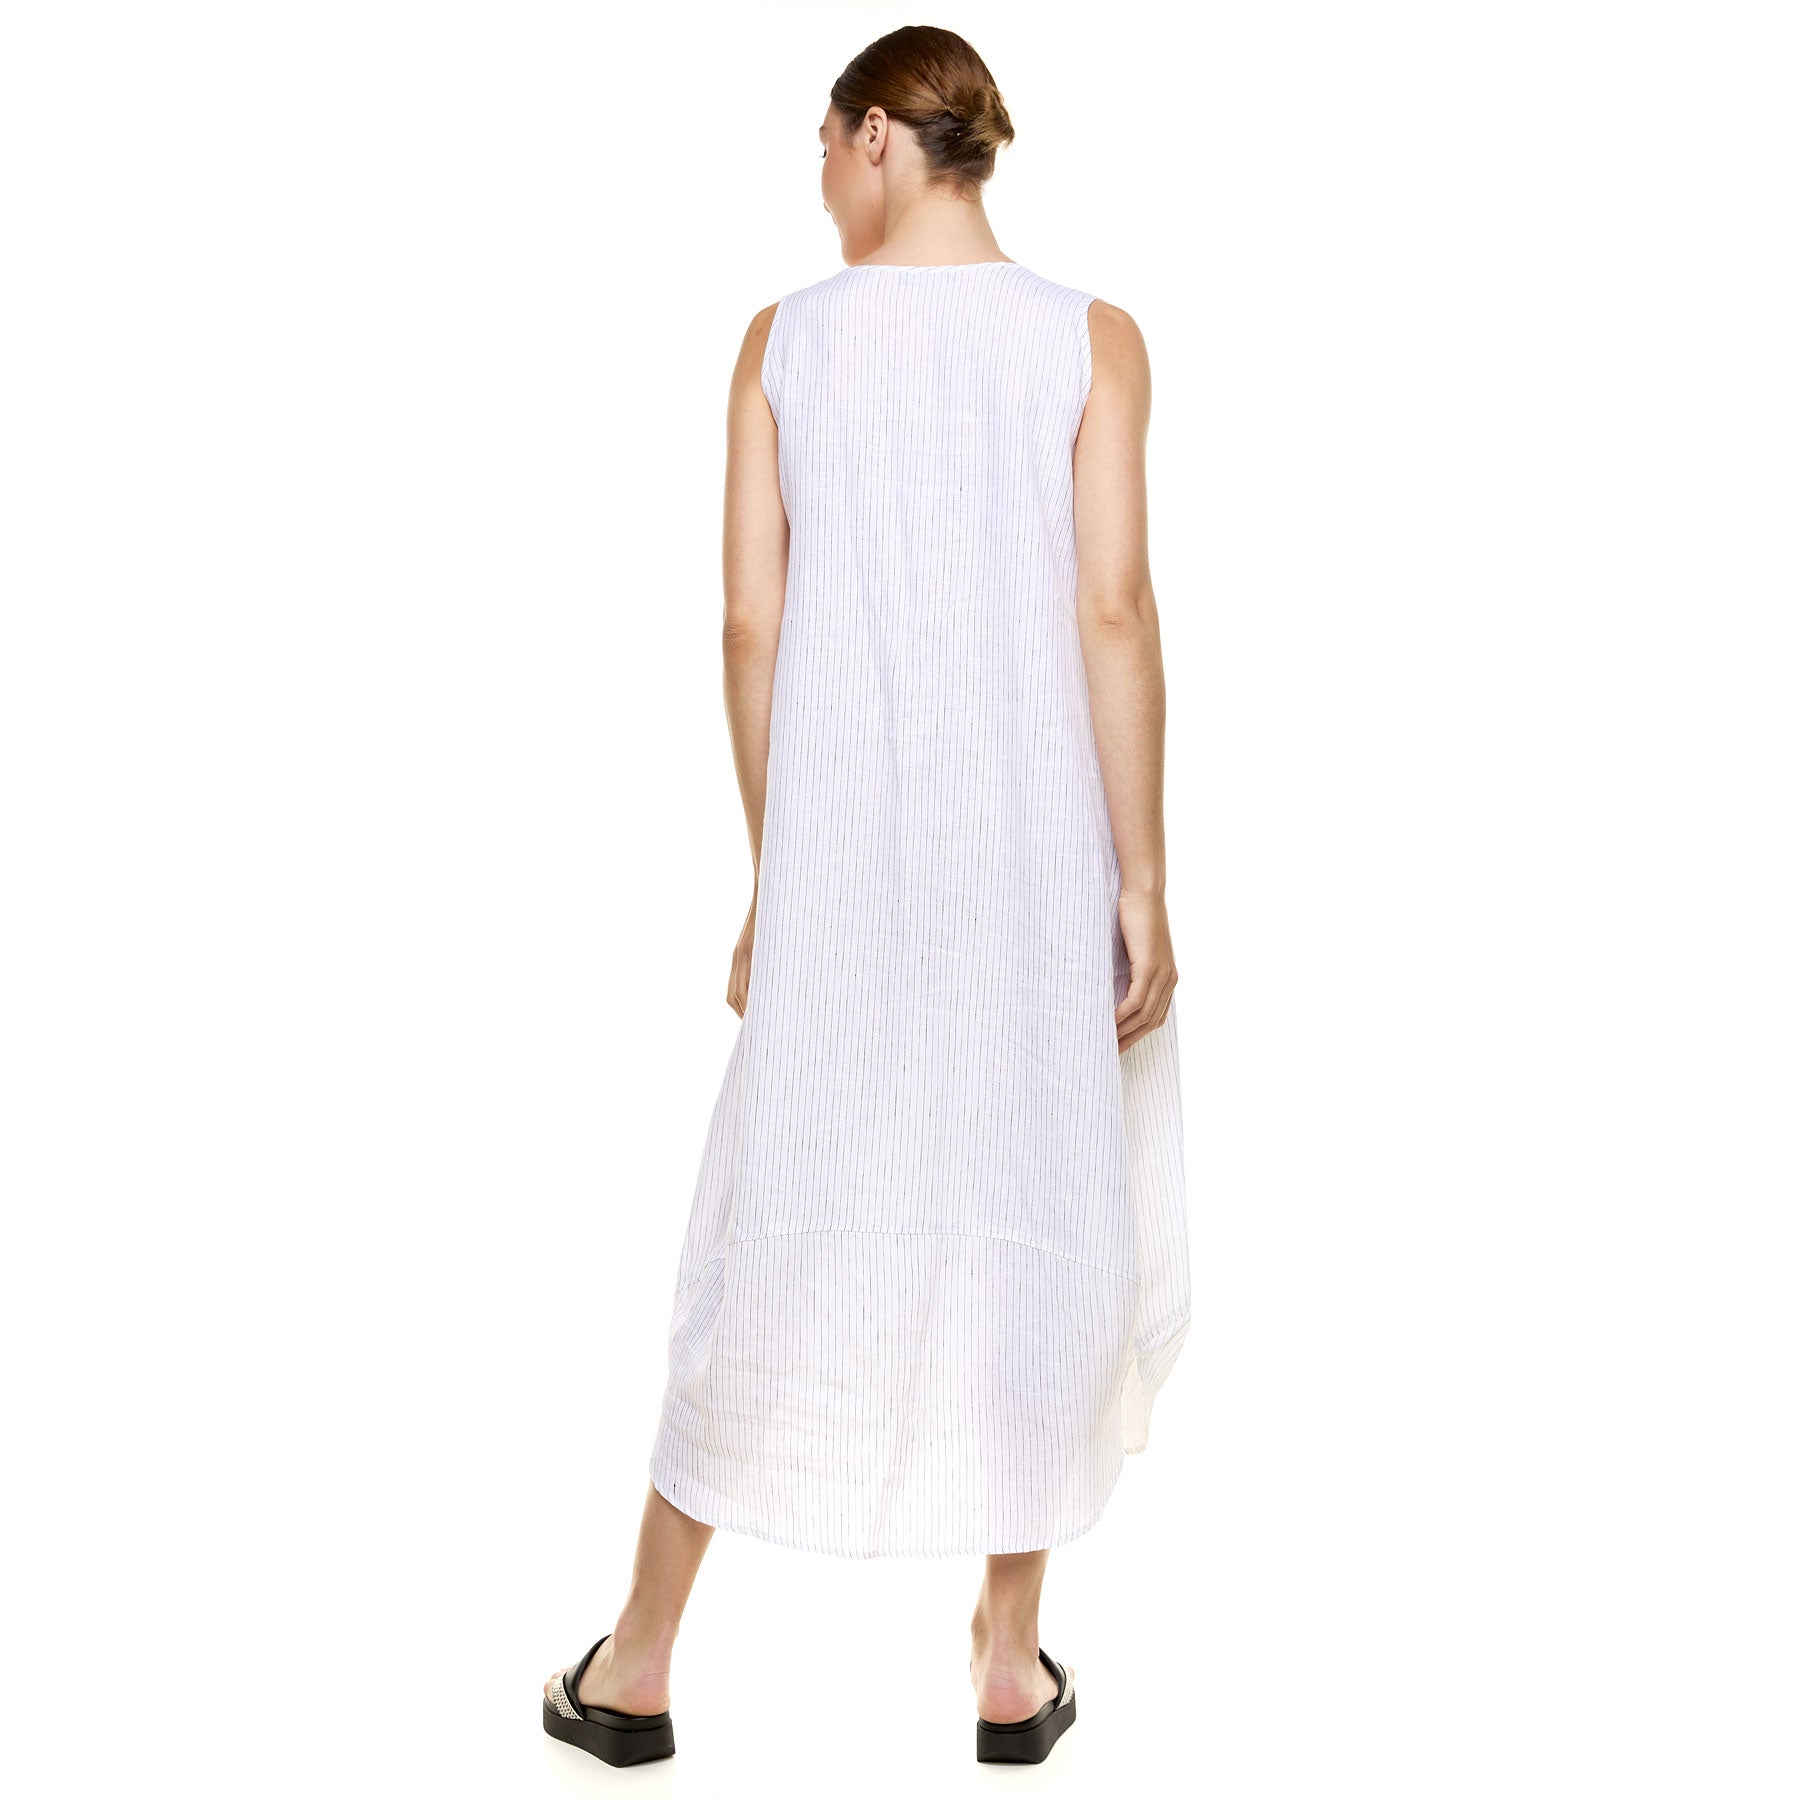 Chic & Simple Αμάνικο Φόρεμα Αντιγόνη - Άσπρο με Λεπτό Ριγέ